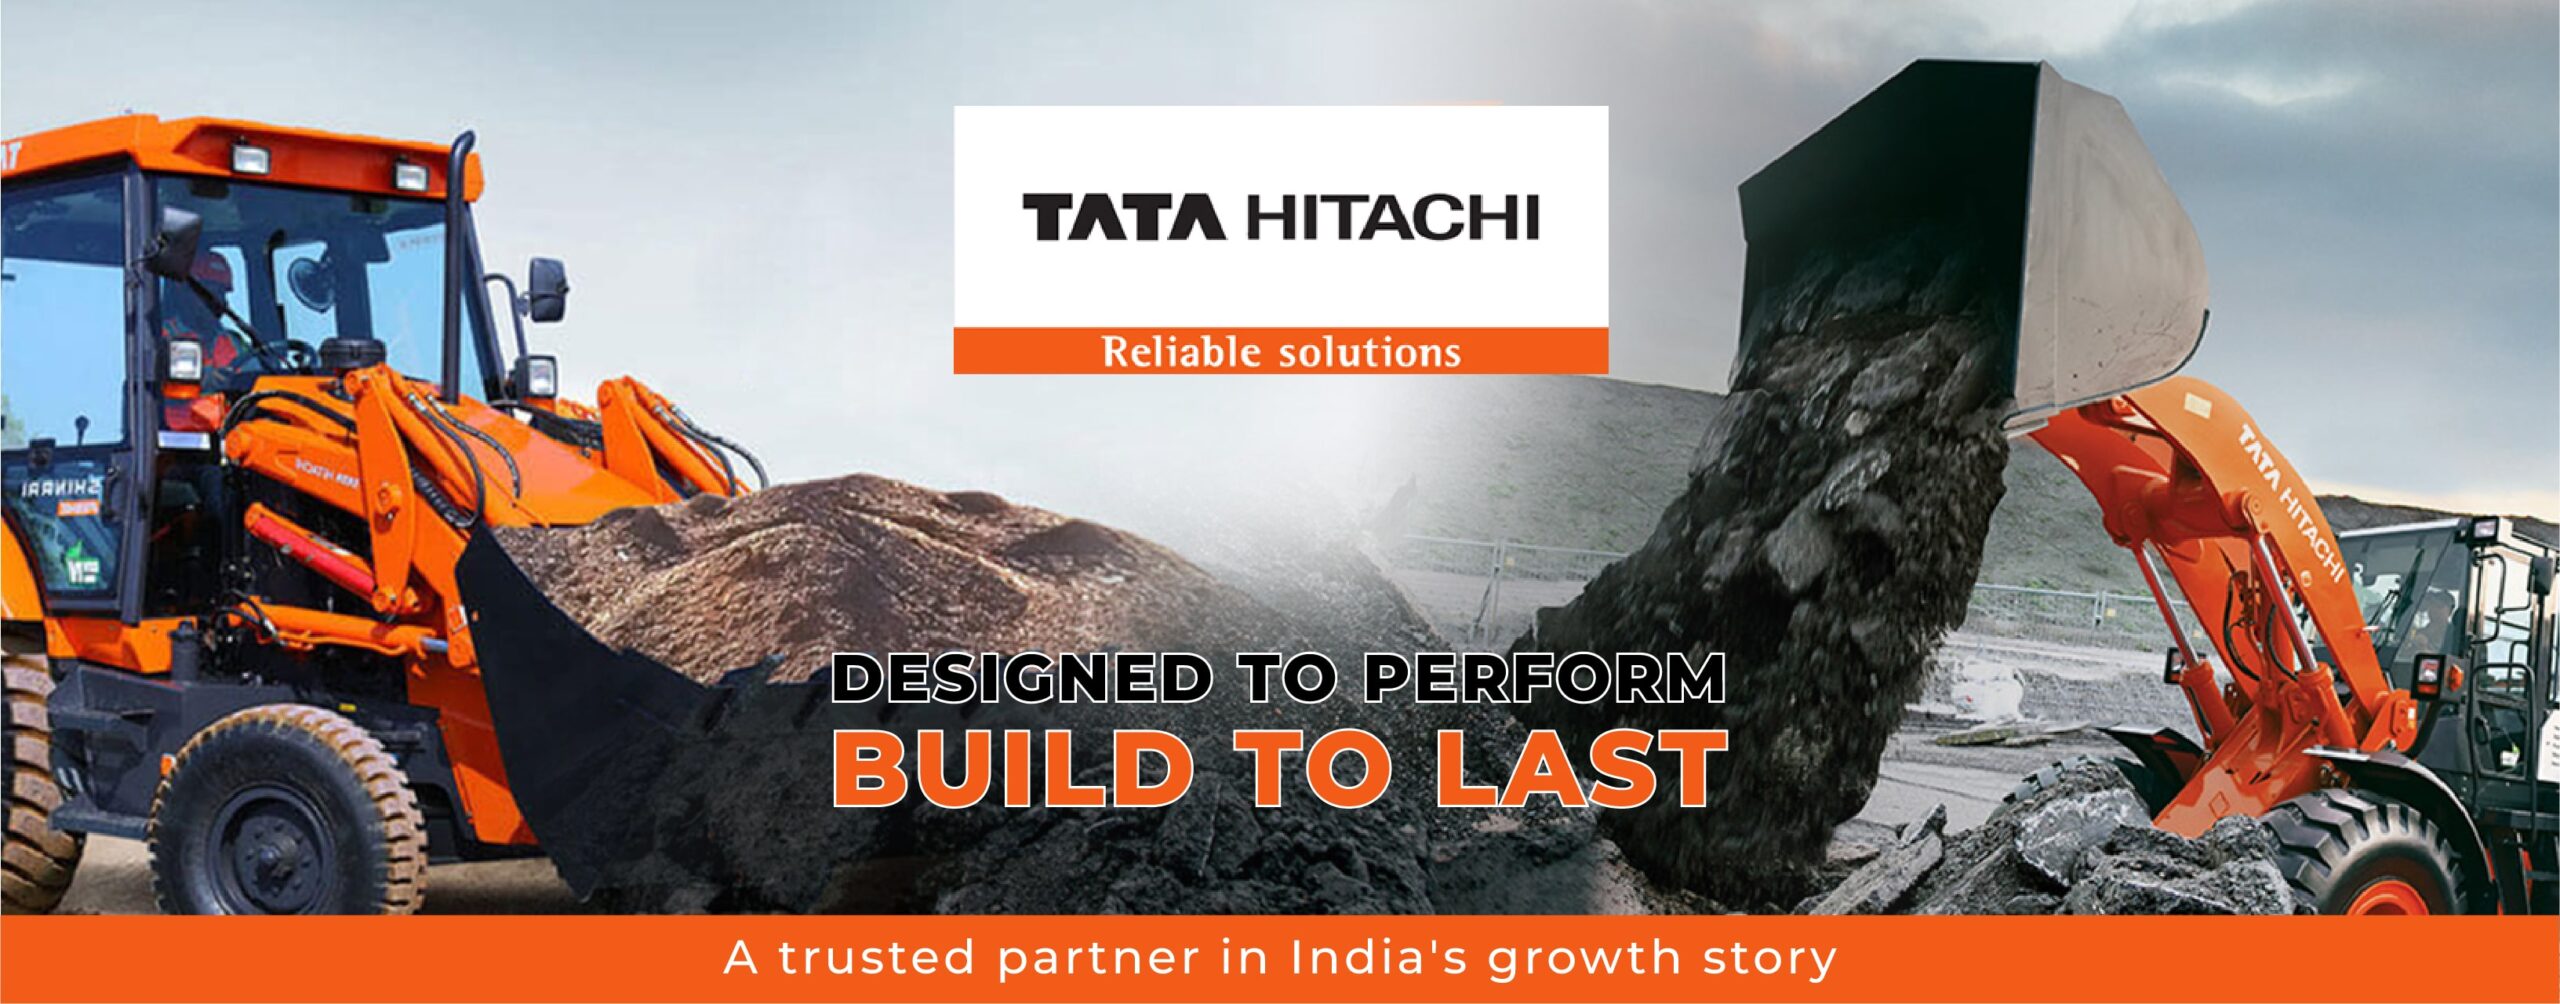 Tata Hitachi Construction vehicles - Dadamotors